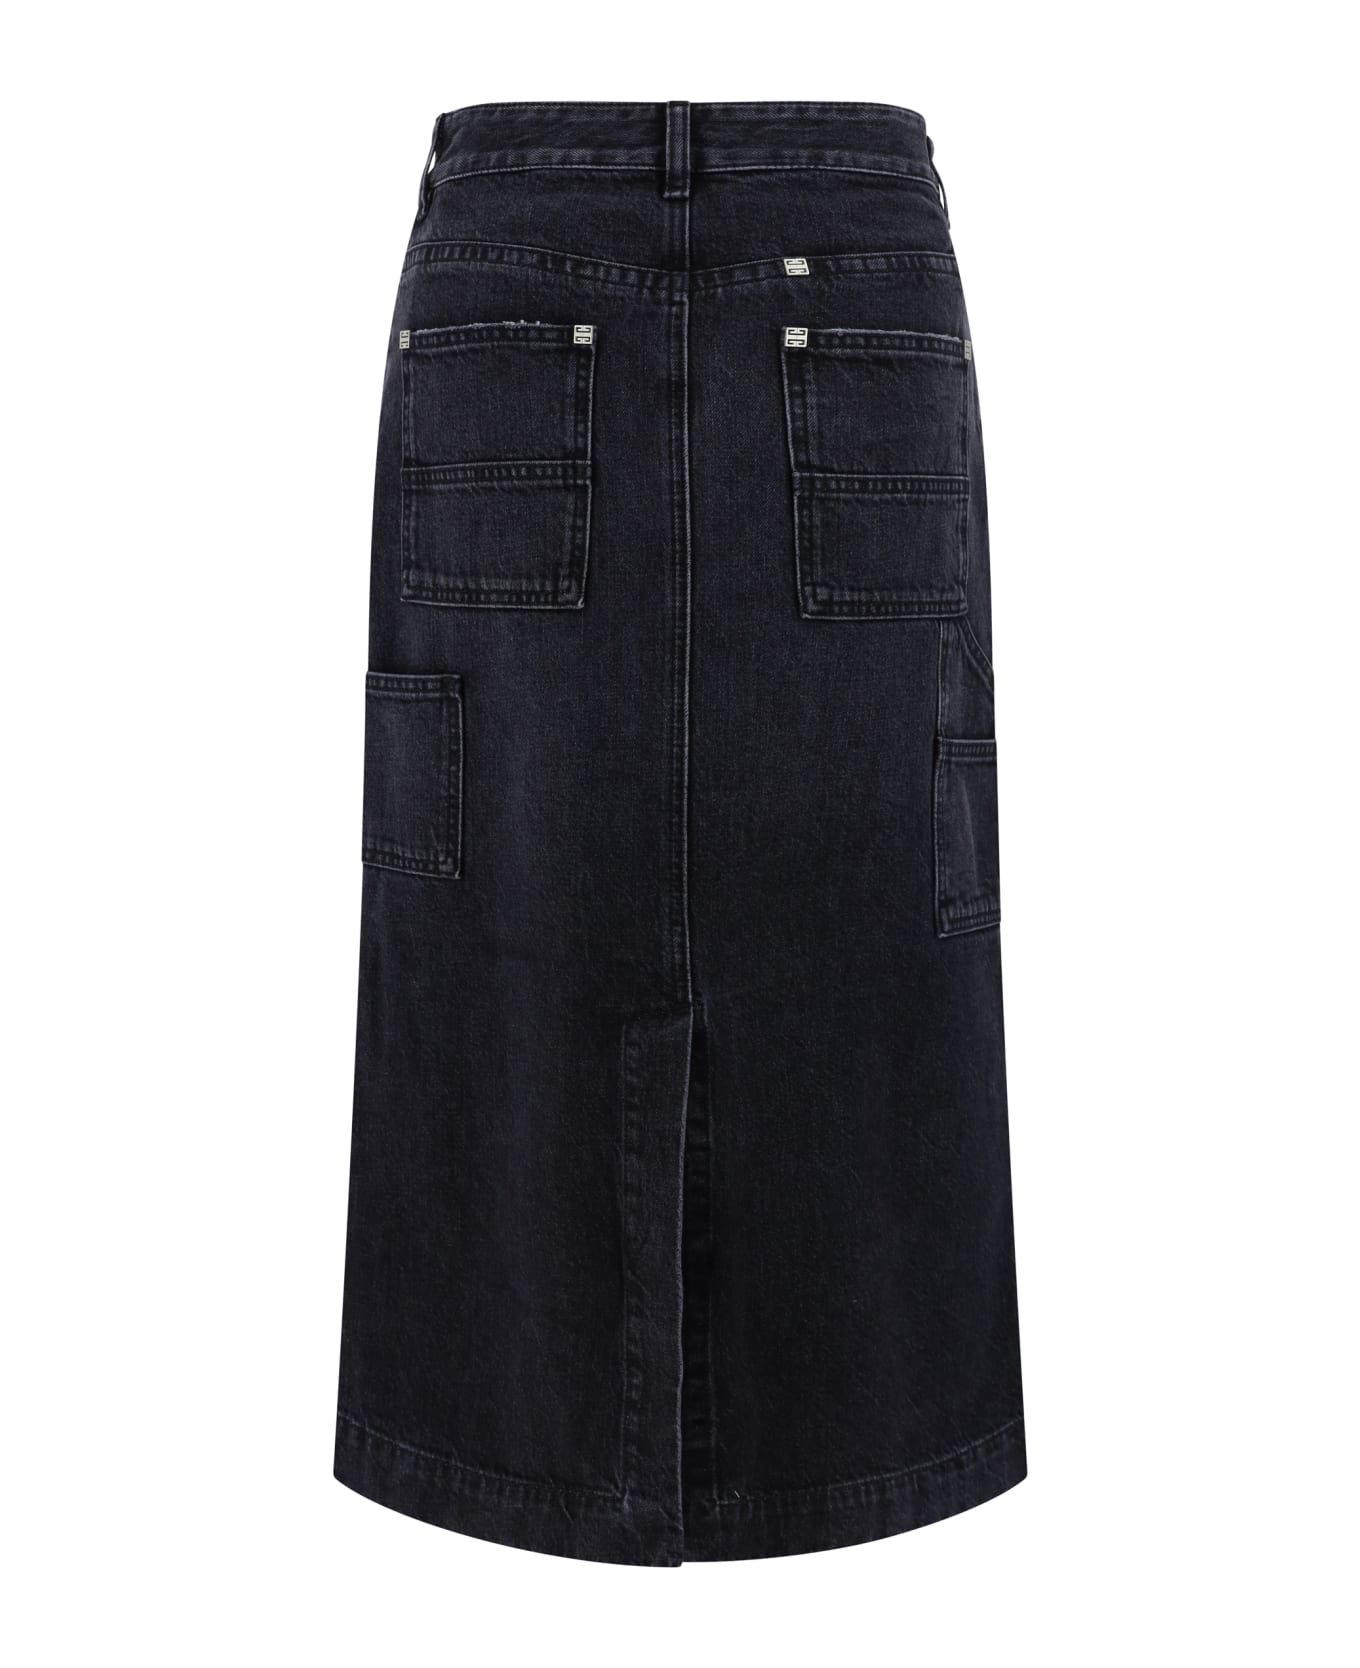 Givenchy Denim Skirt - Faded Black スカート